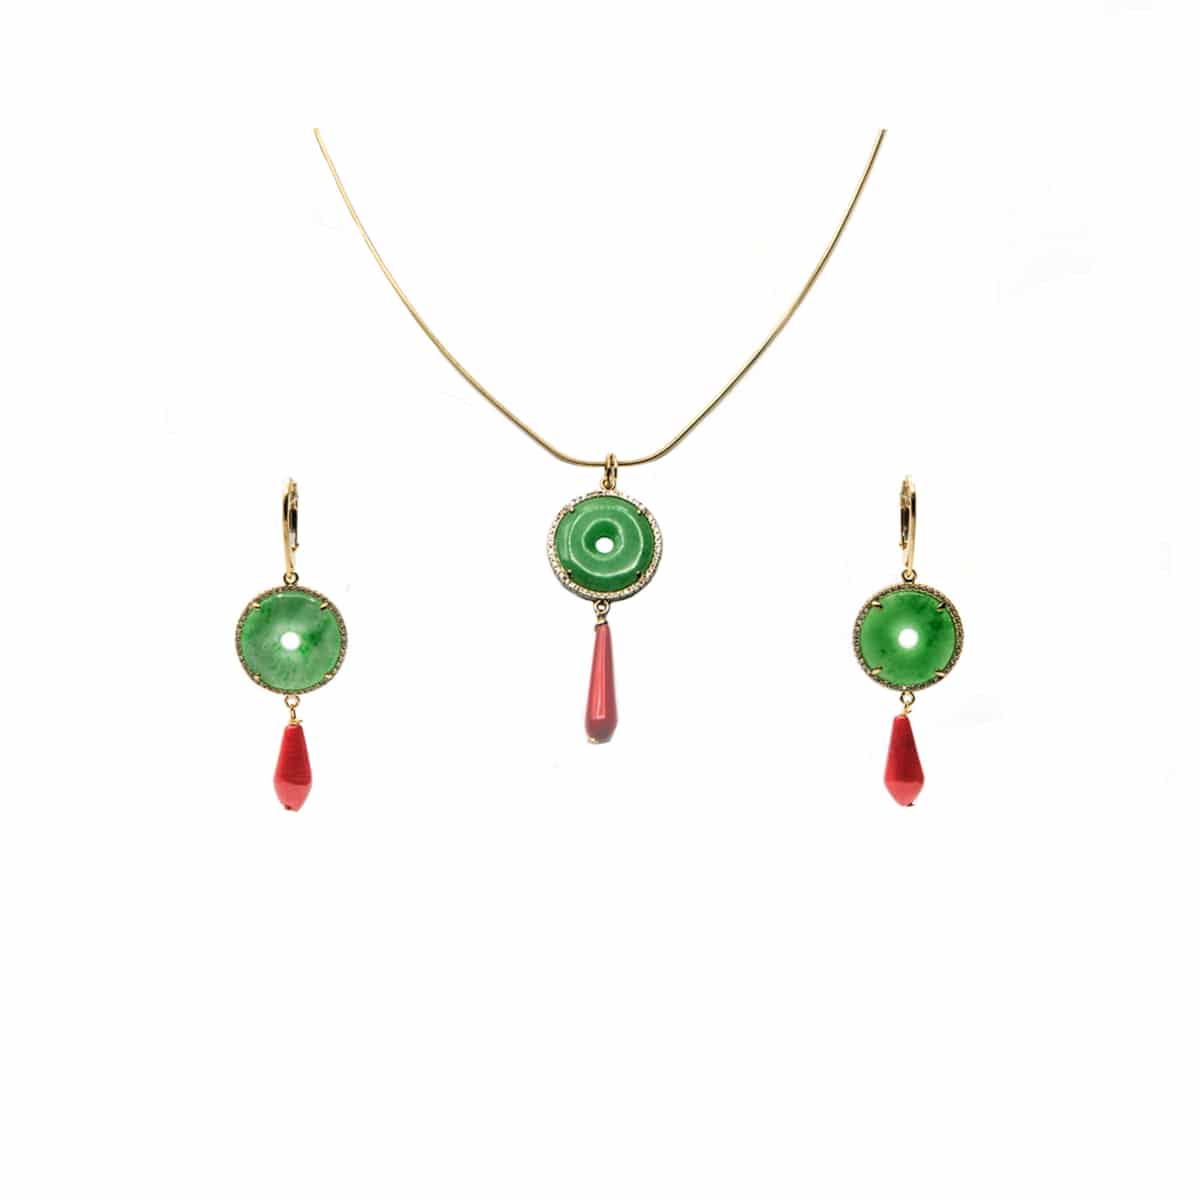 HONG BOCK design set / pendant + earrings